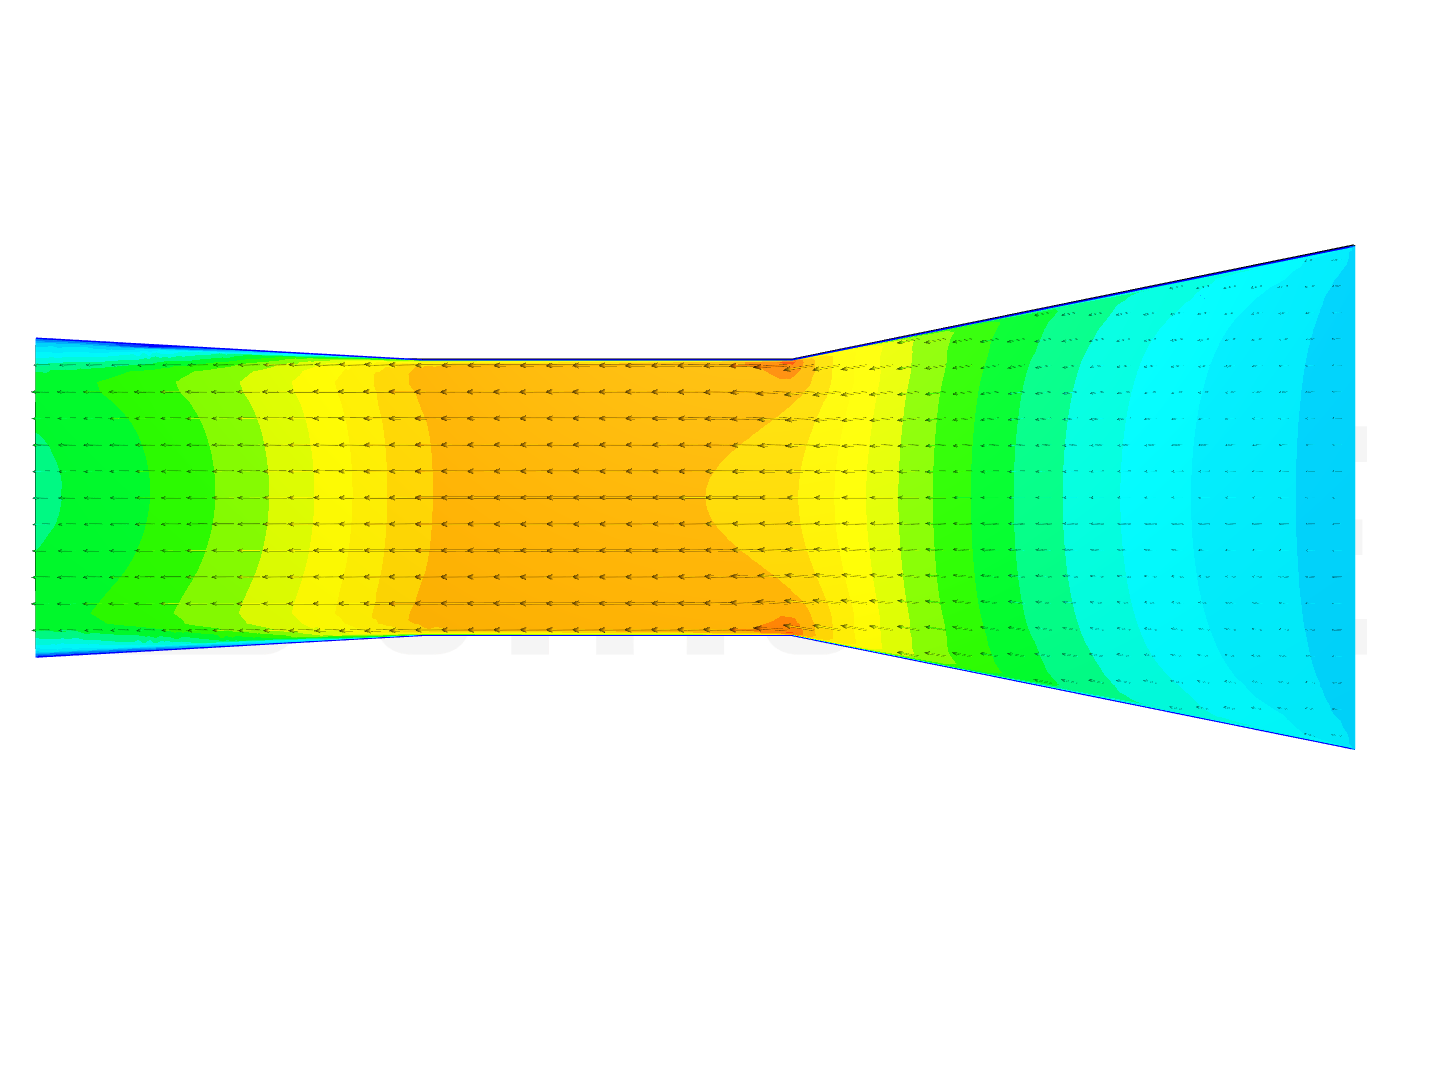 Wind Tunnel Simulation image